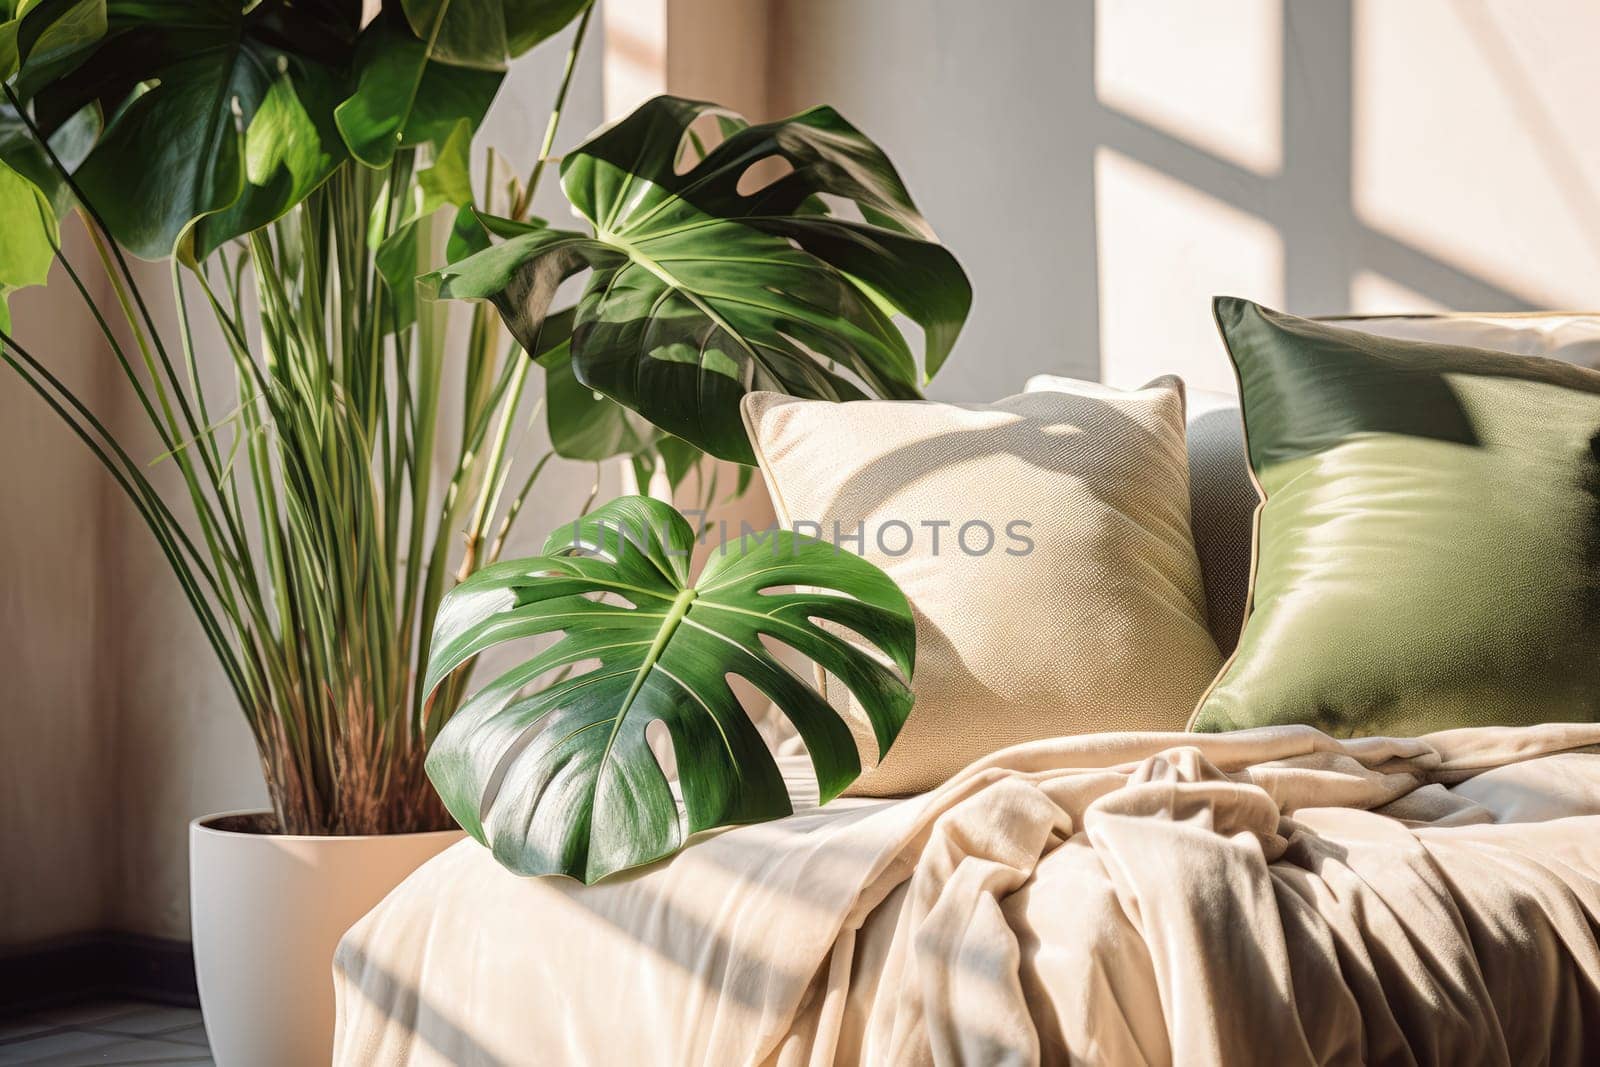 Cozy bright bedroom with indoor plants.Home interior design.Biophilia design,urban jungle concept by Ramanouskaya